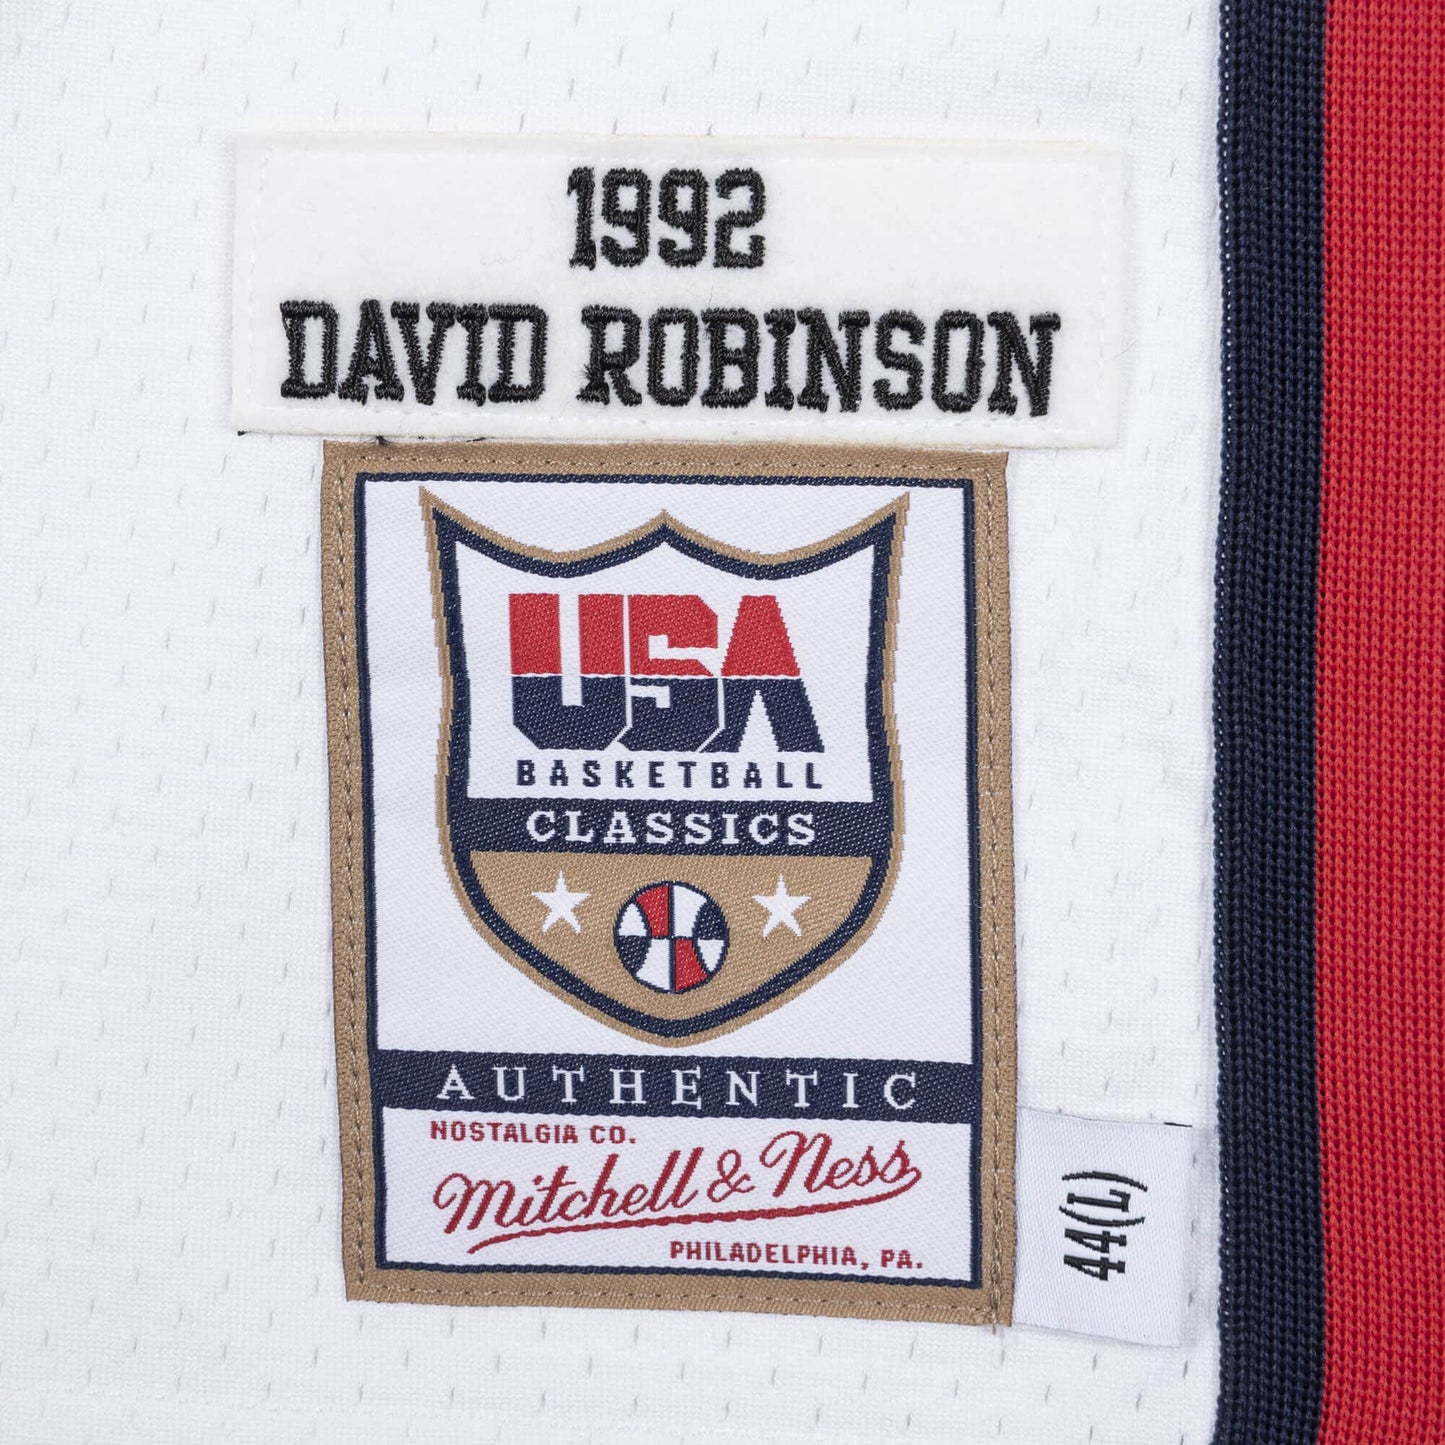 Authentic Jersey Team USA 1992 David Robinson